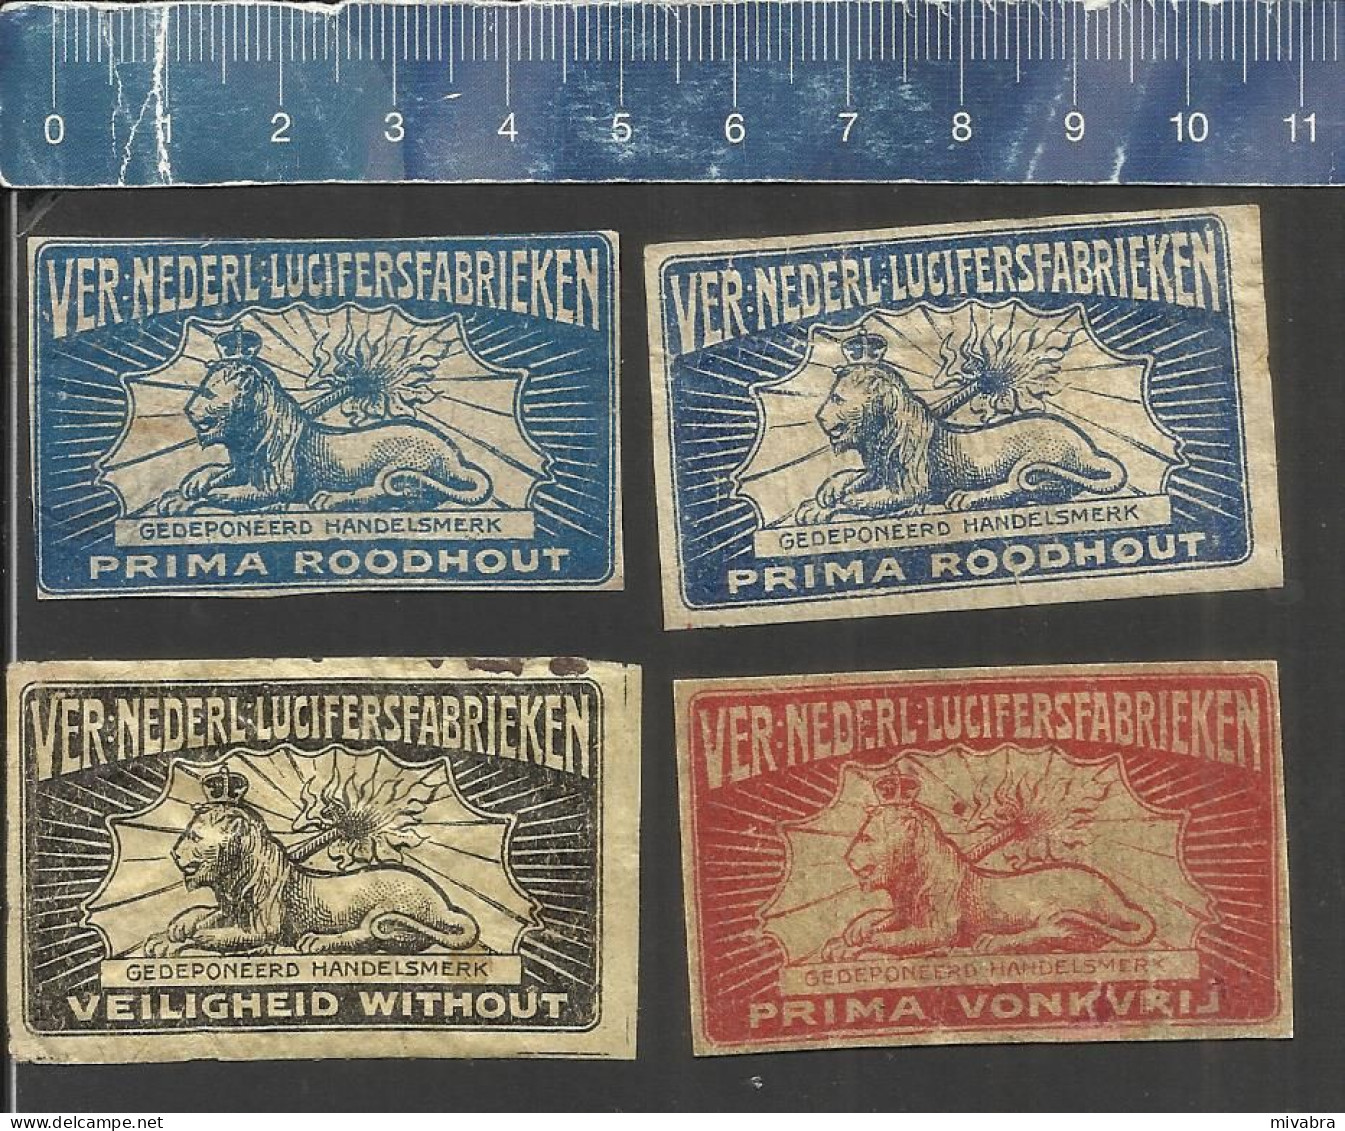 VER. NEDERL. LUCIFERSFABRIEKEN WITHOUT ROODHOUT VONKVRIJ  - OLD MATCHBOX LABELS THE NETHERLANDS (HOLLAND) ± 1900 - Boites D'allumettes - Etiquettes